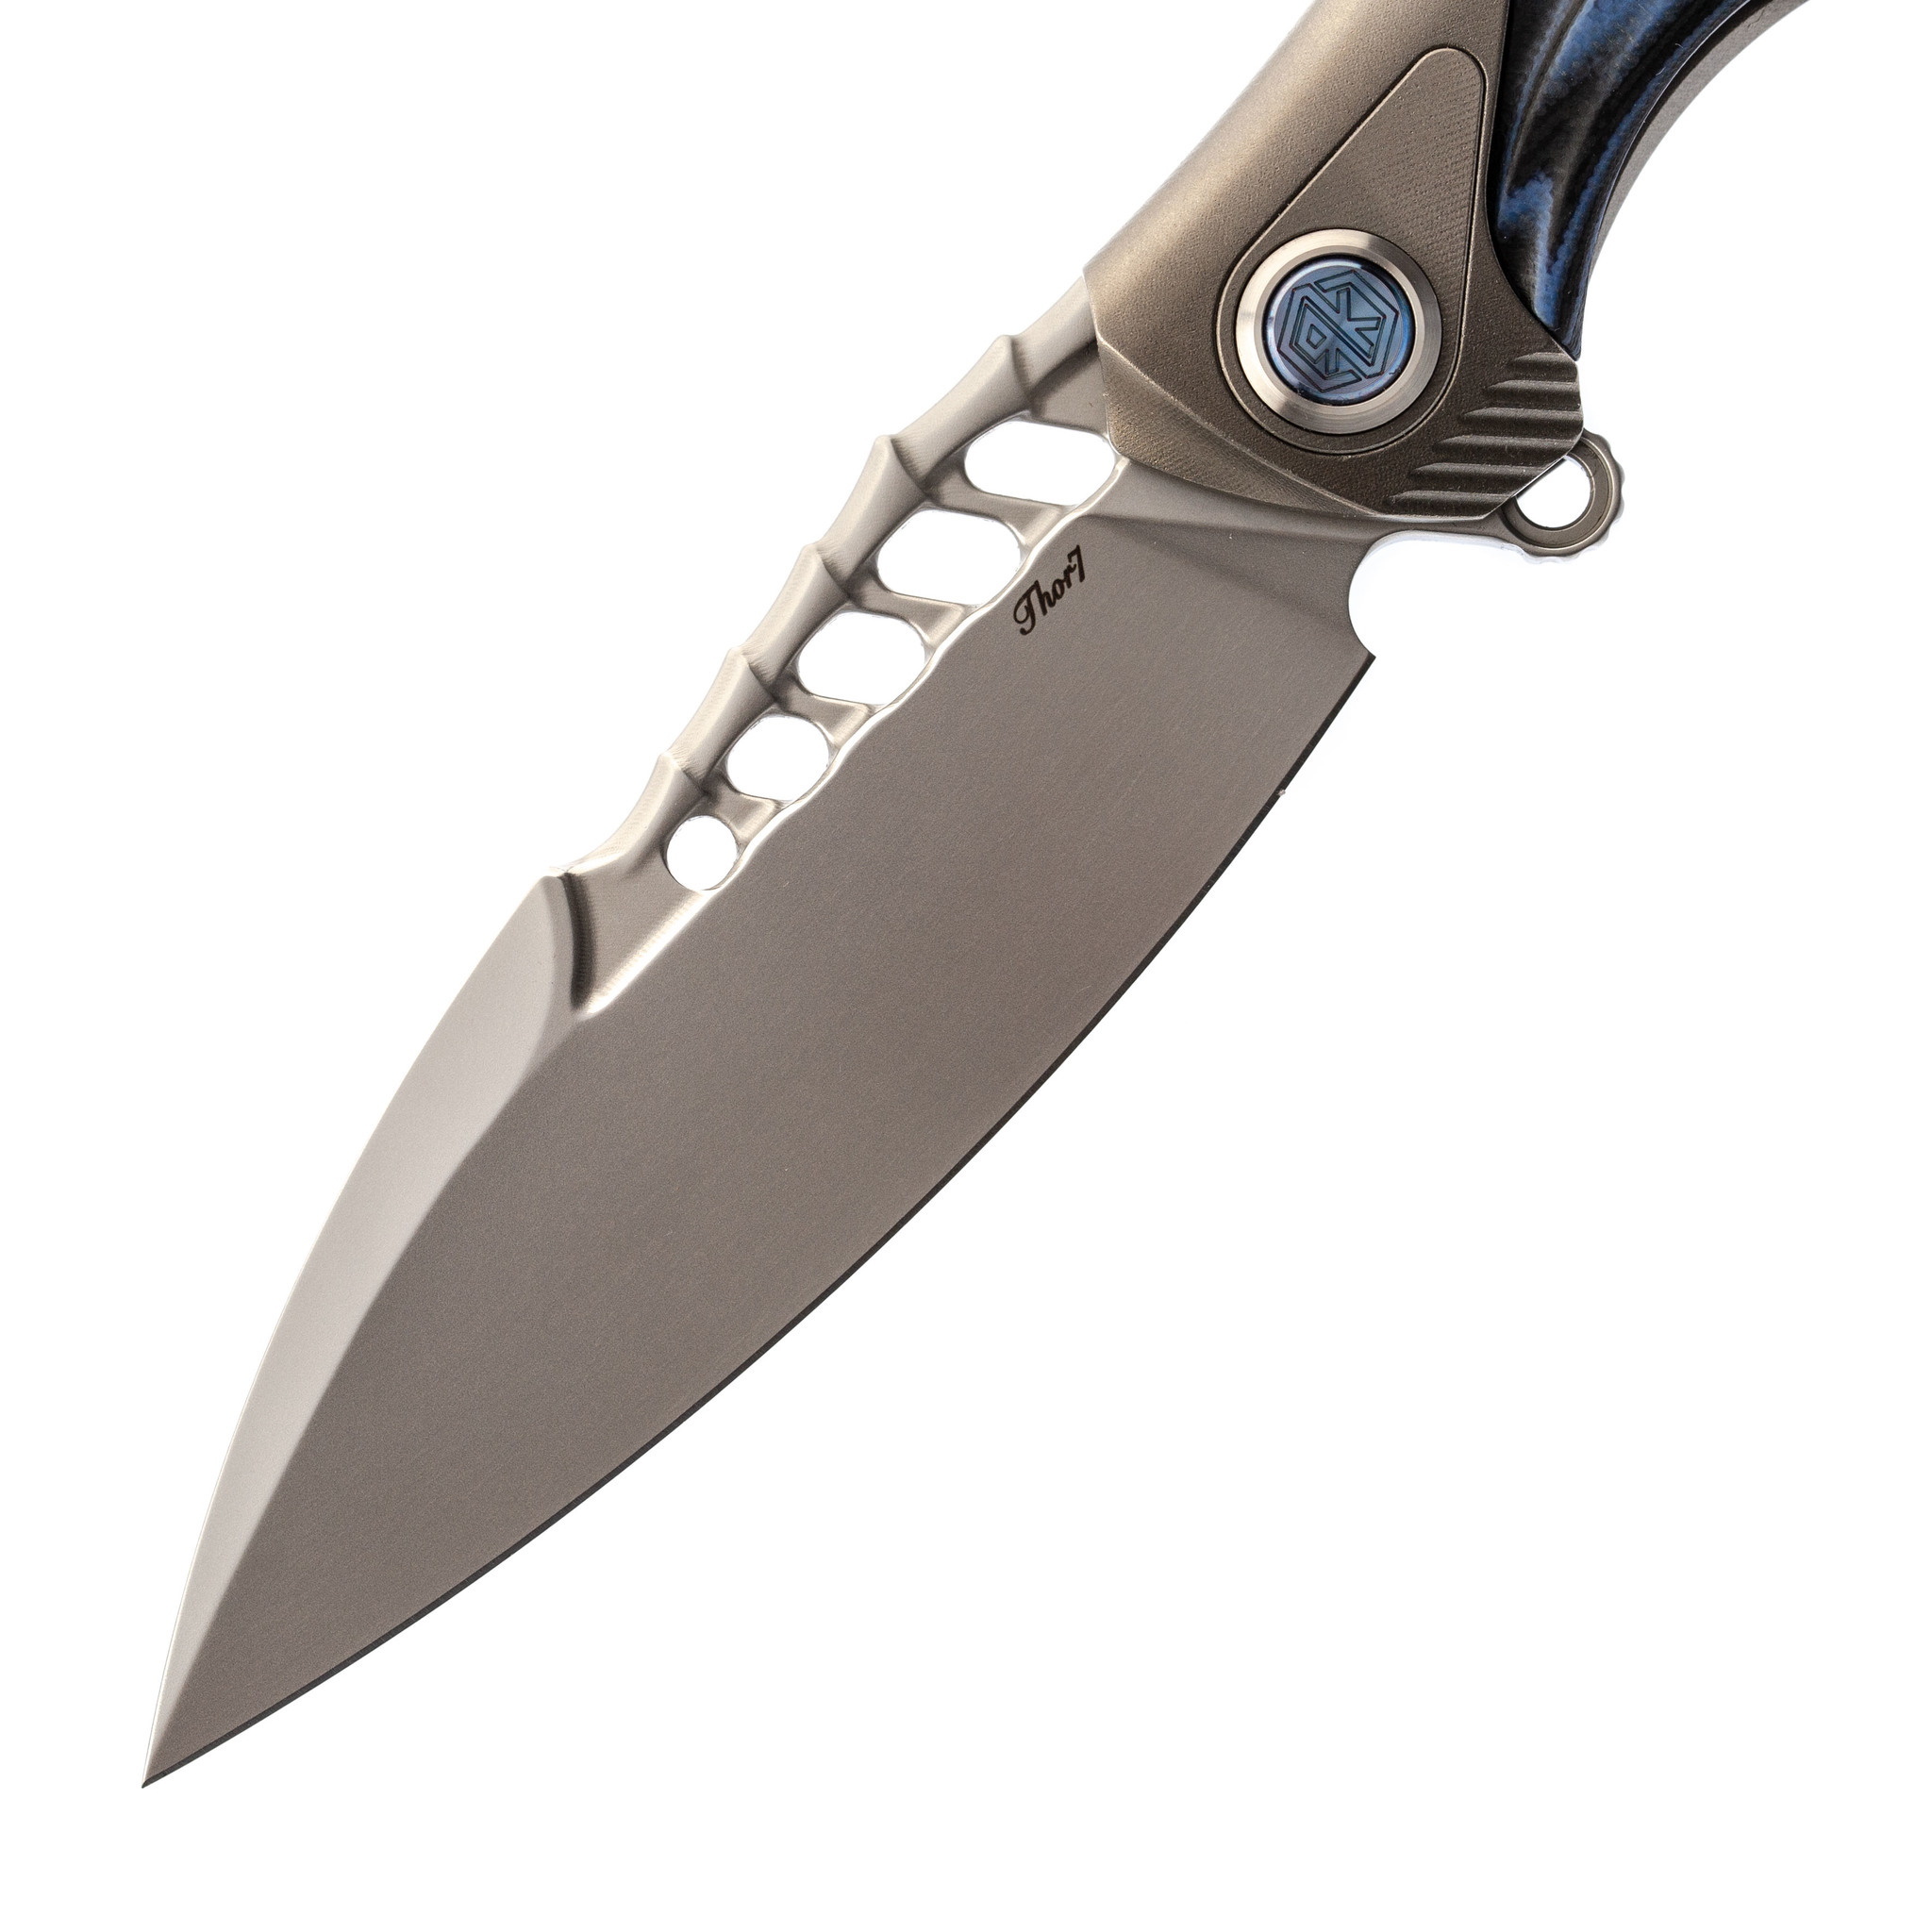 Нож складной Thor 7 Rikeknife, сталь 154CM, Blue Titanium/G10 - фото 2